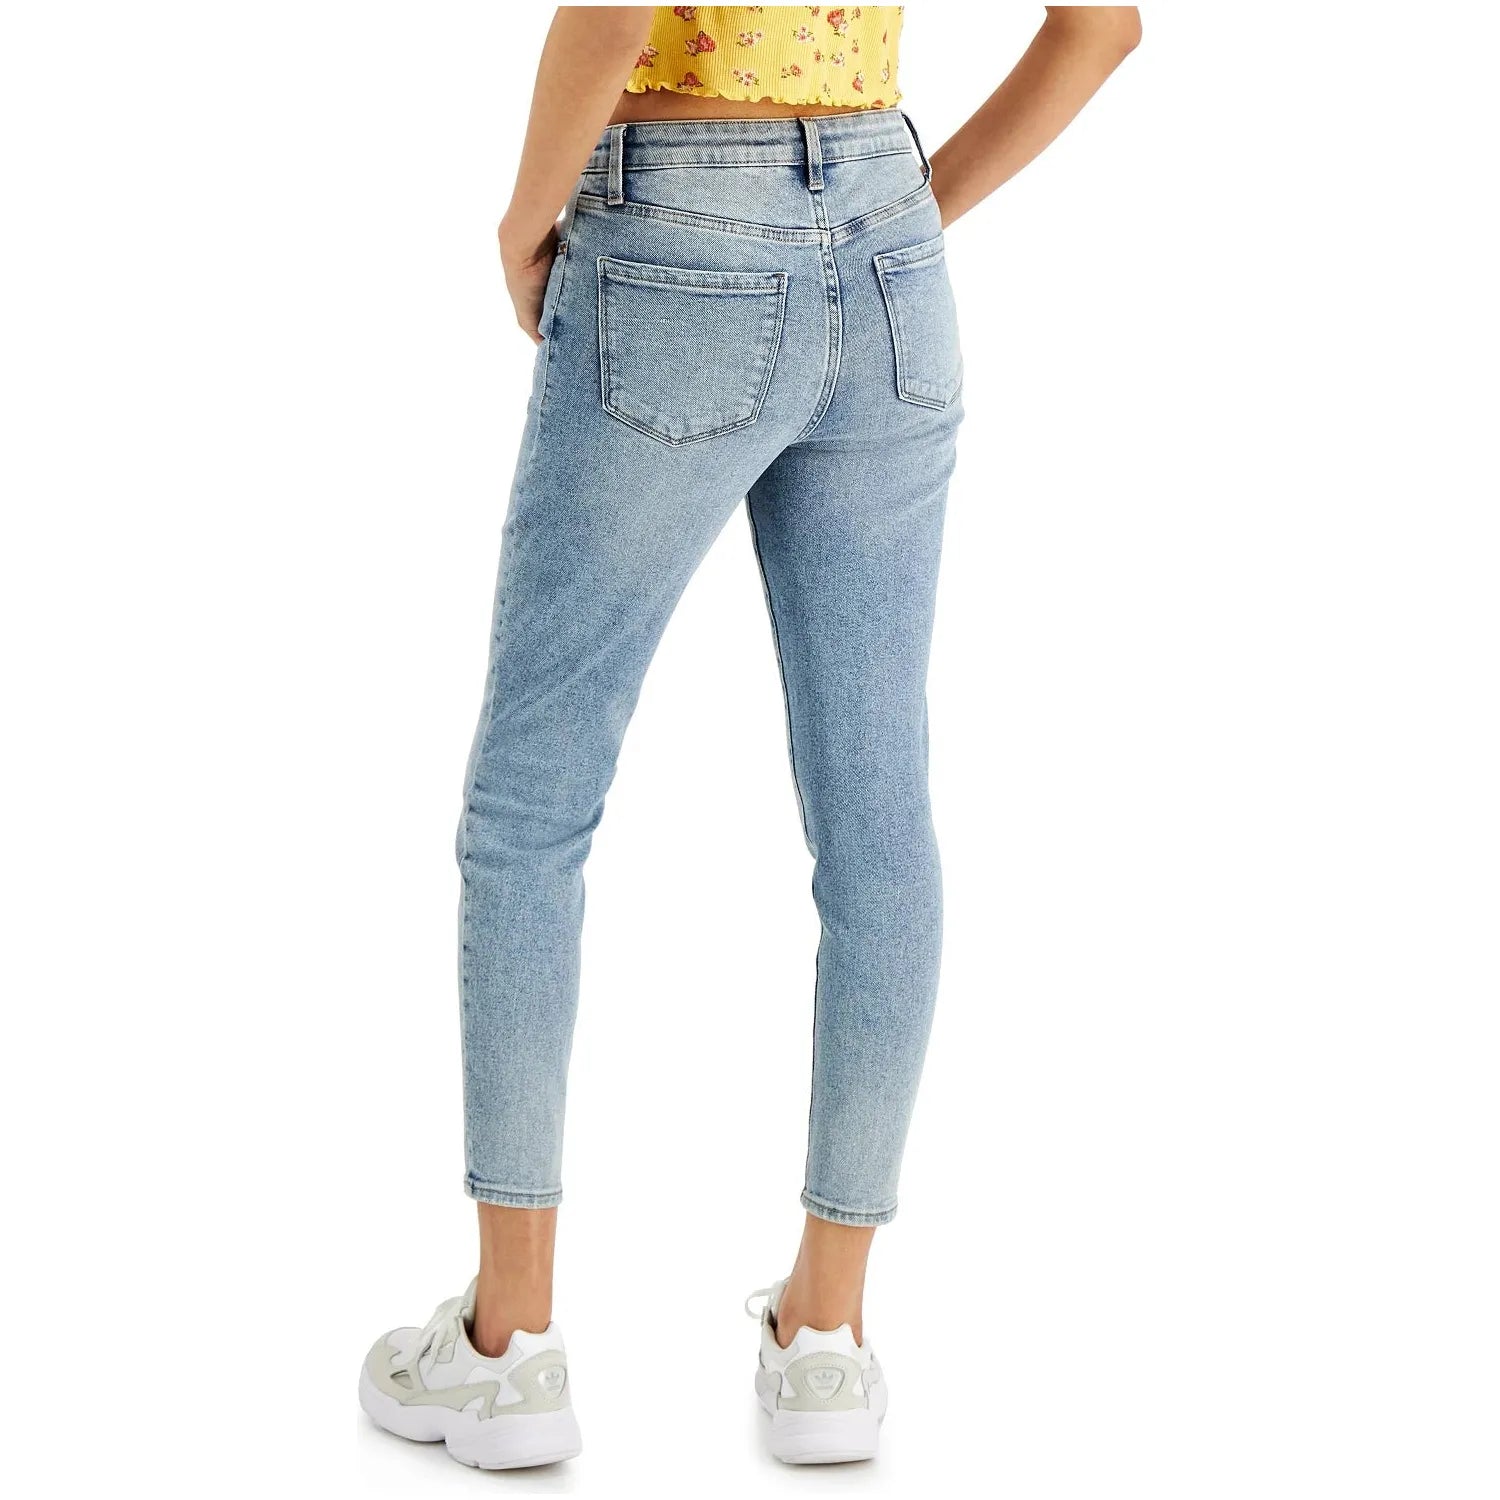 Celebrity Pink-Celebrity Pink Juniors Curvy Mid-Rise Distressed Skinny Jeans, Blue, Size: 11 - Brandat Outlet